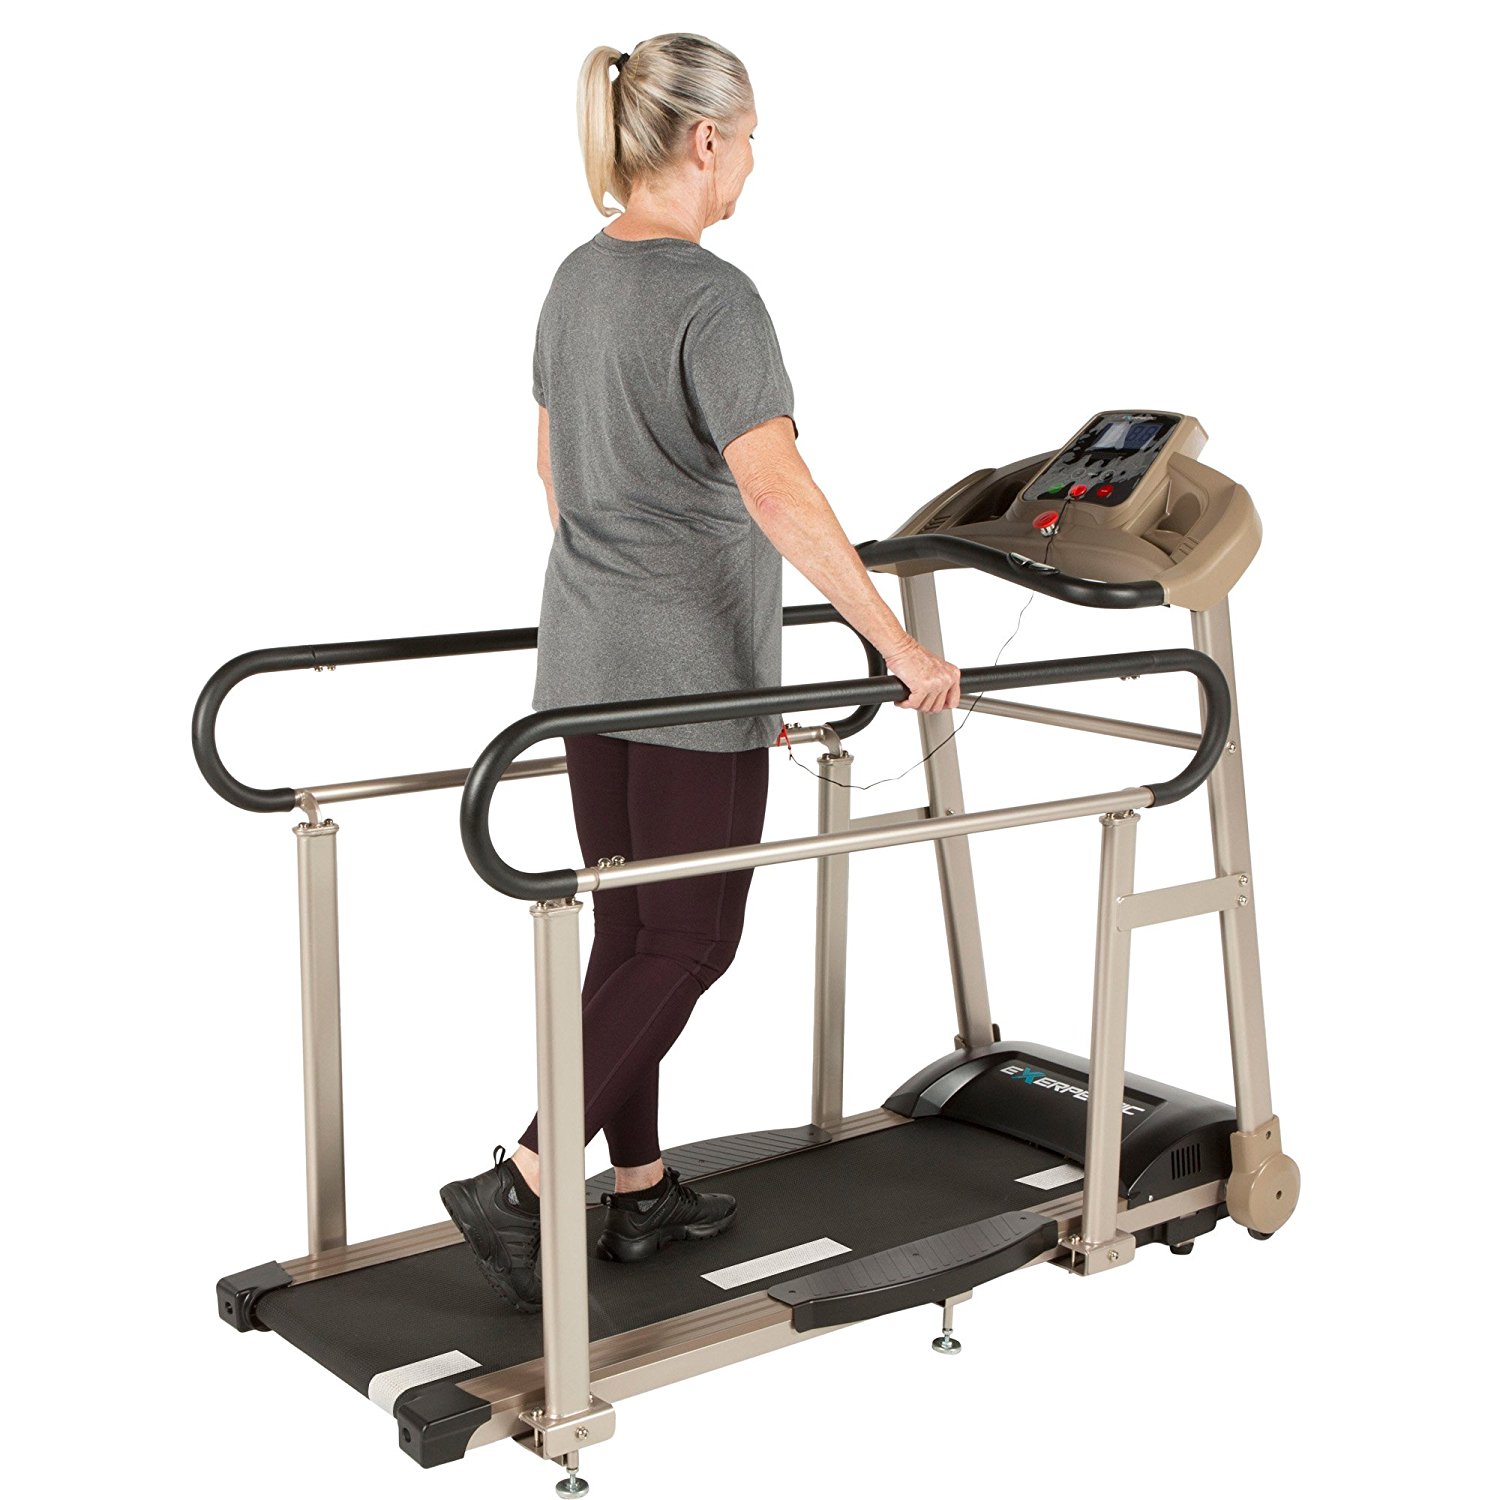 The Best Treadmill For Elderly Runners And Walkers Enlightened Treadmills